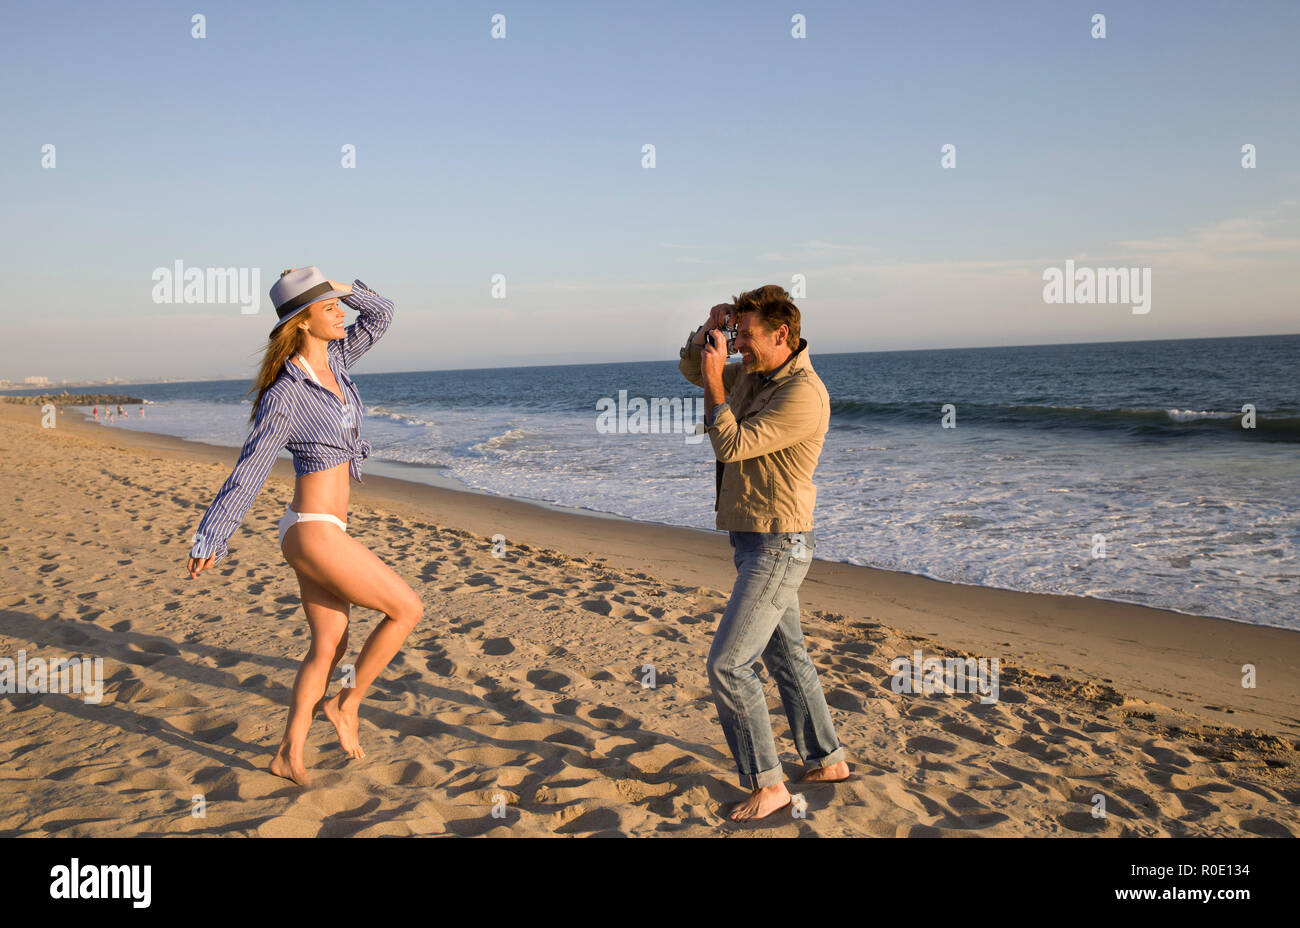 Man Taking Photo of Woman on Beach II Stock Photo